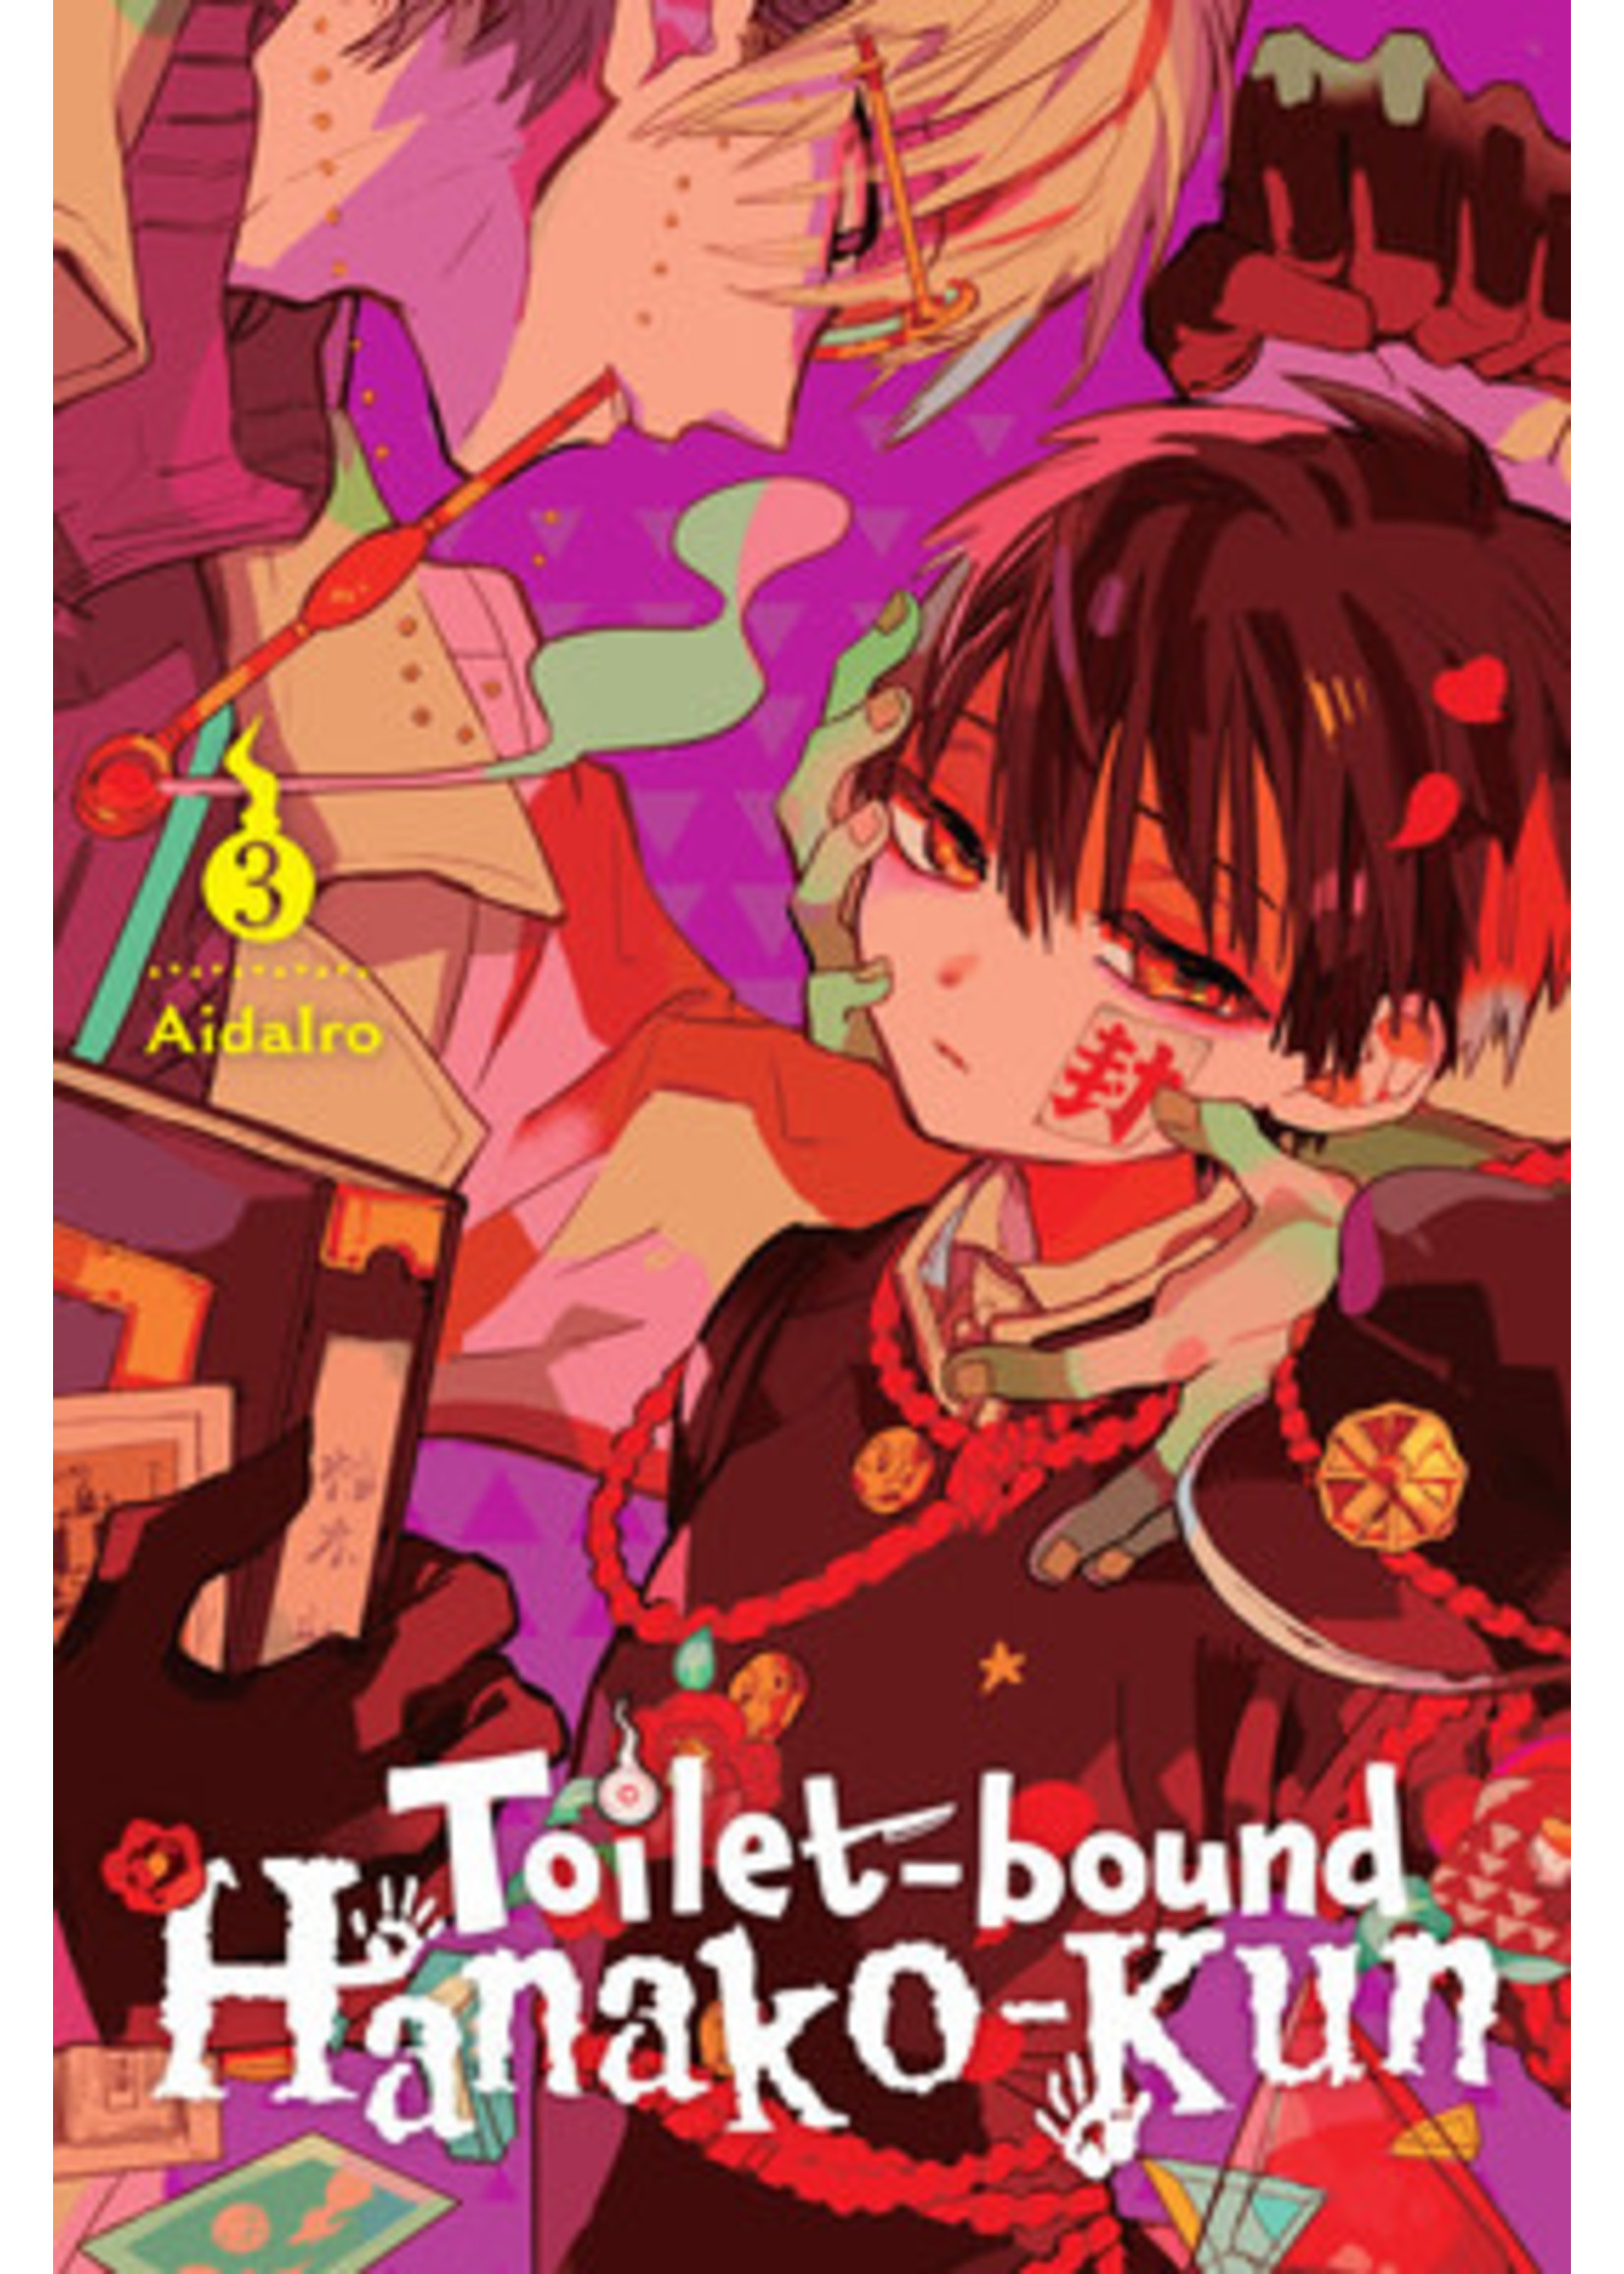 Toilet-bound Hanako-kun, Vol. 3 by AidaIro